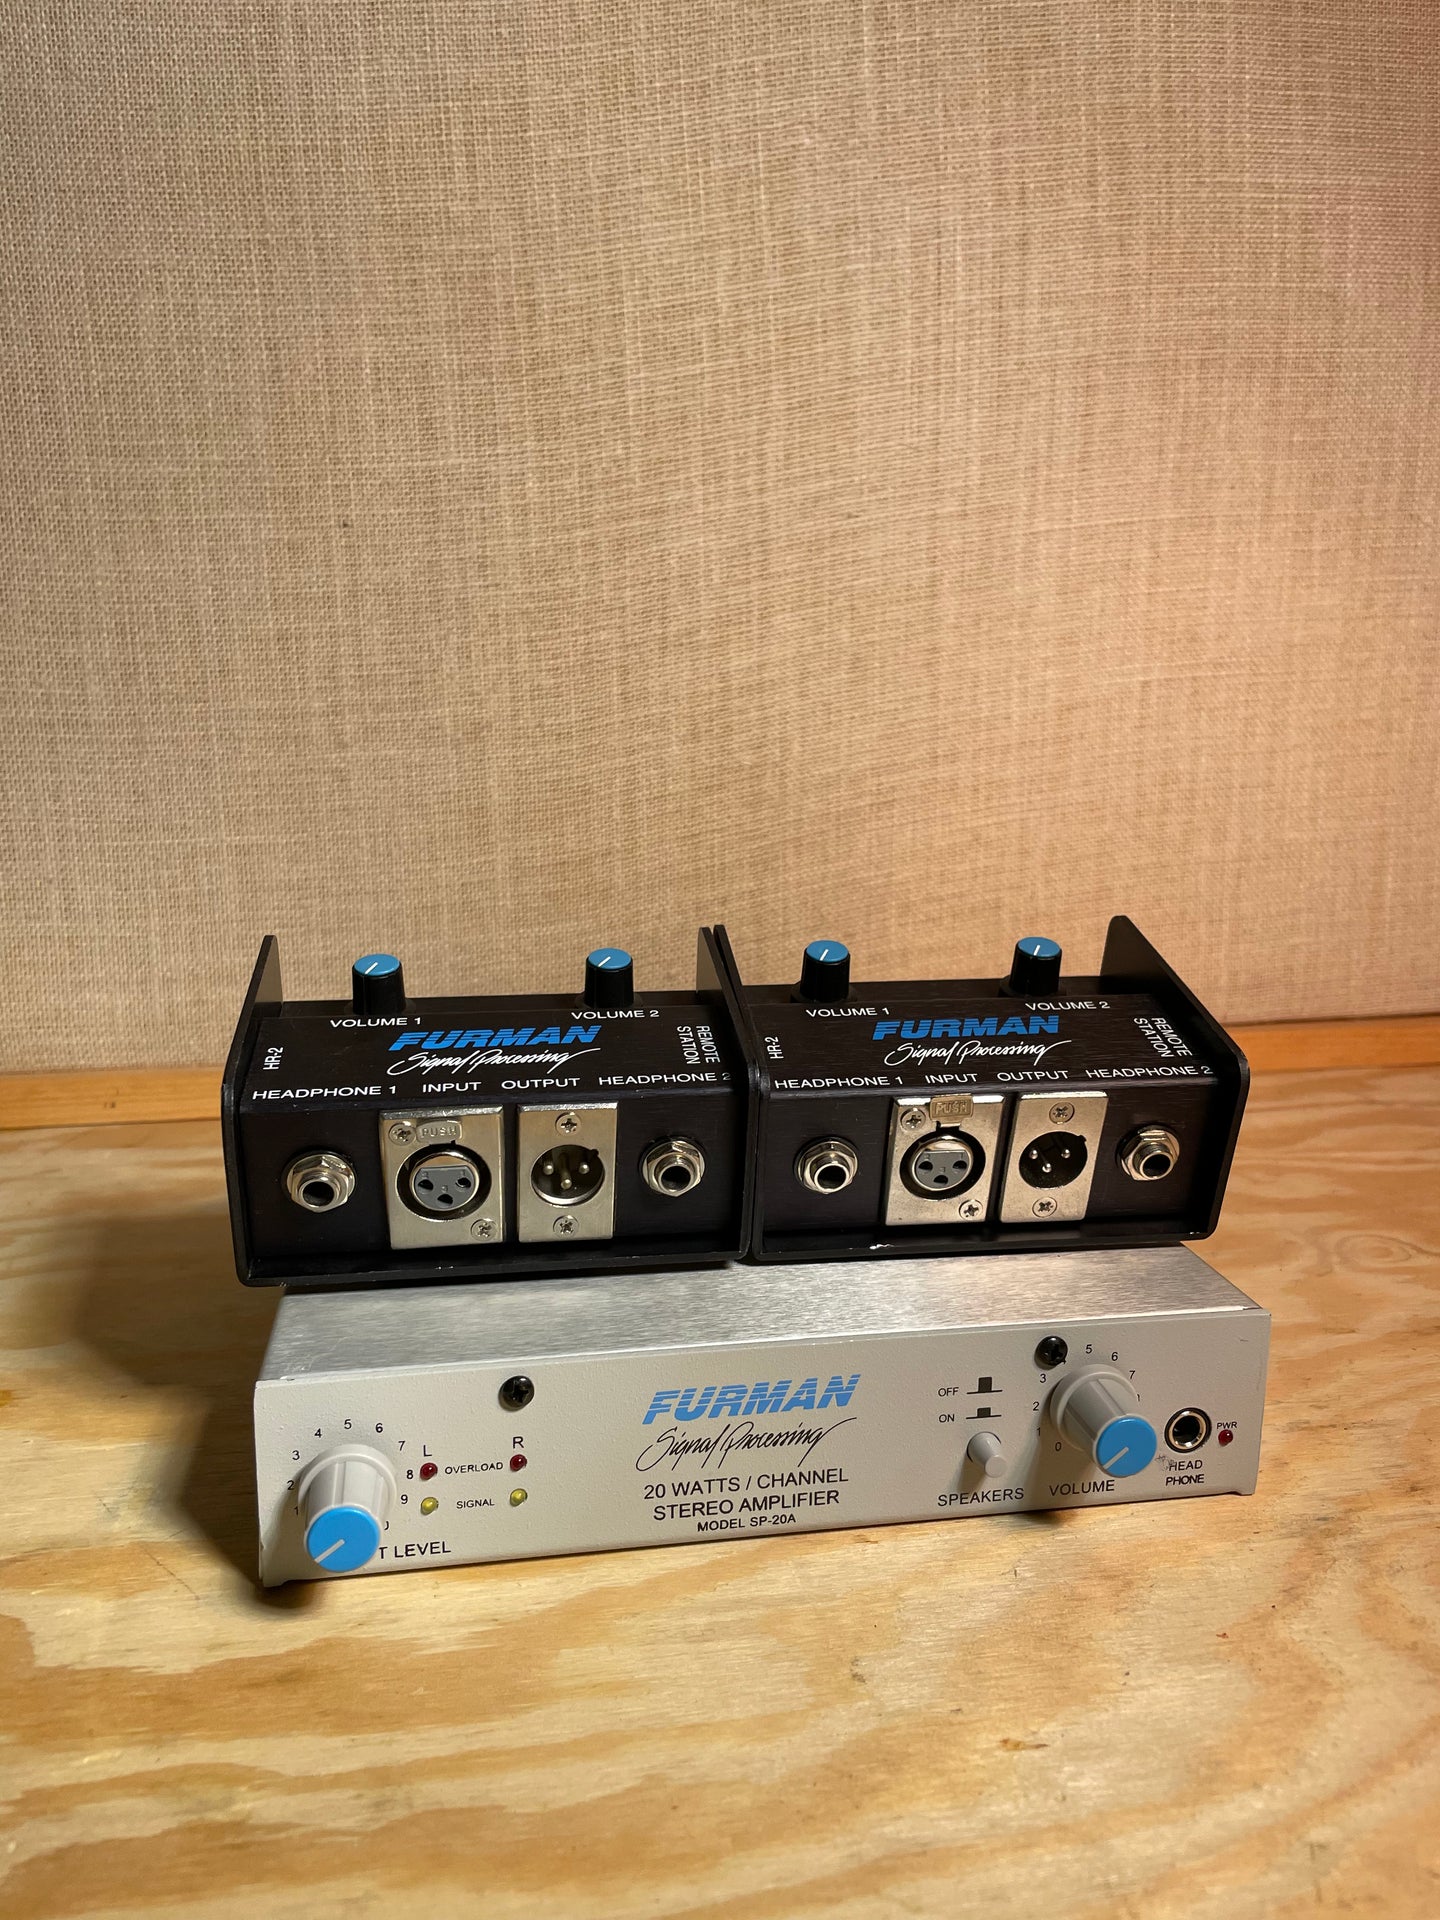 Furman SP-20A/HR-2 Stereo Studio Cue System